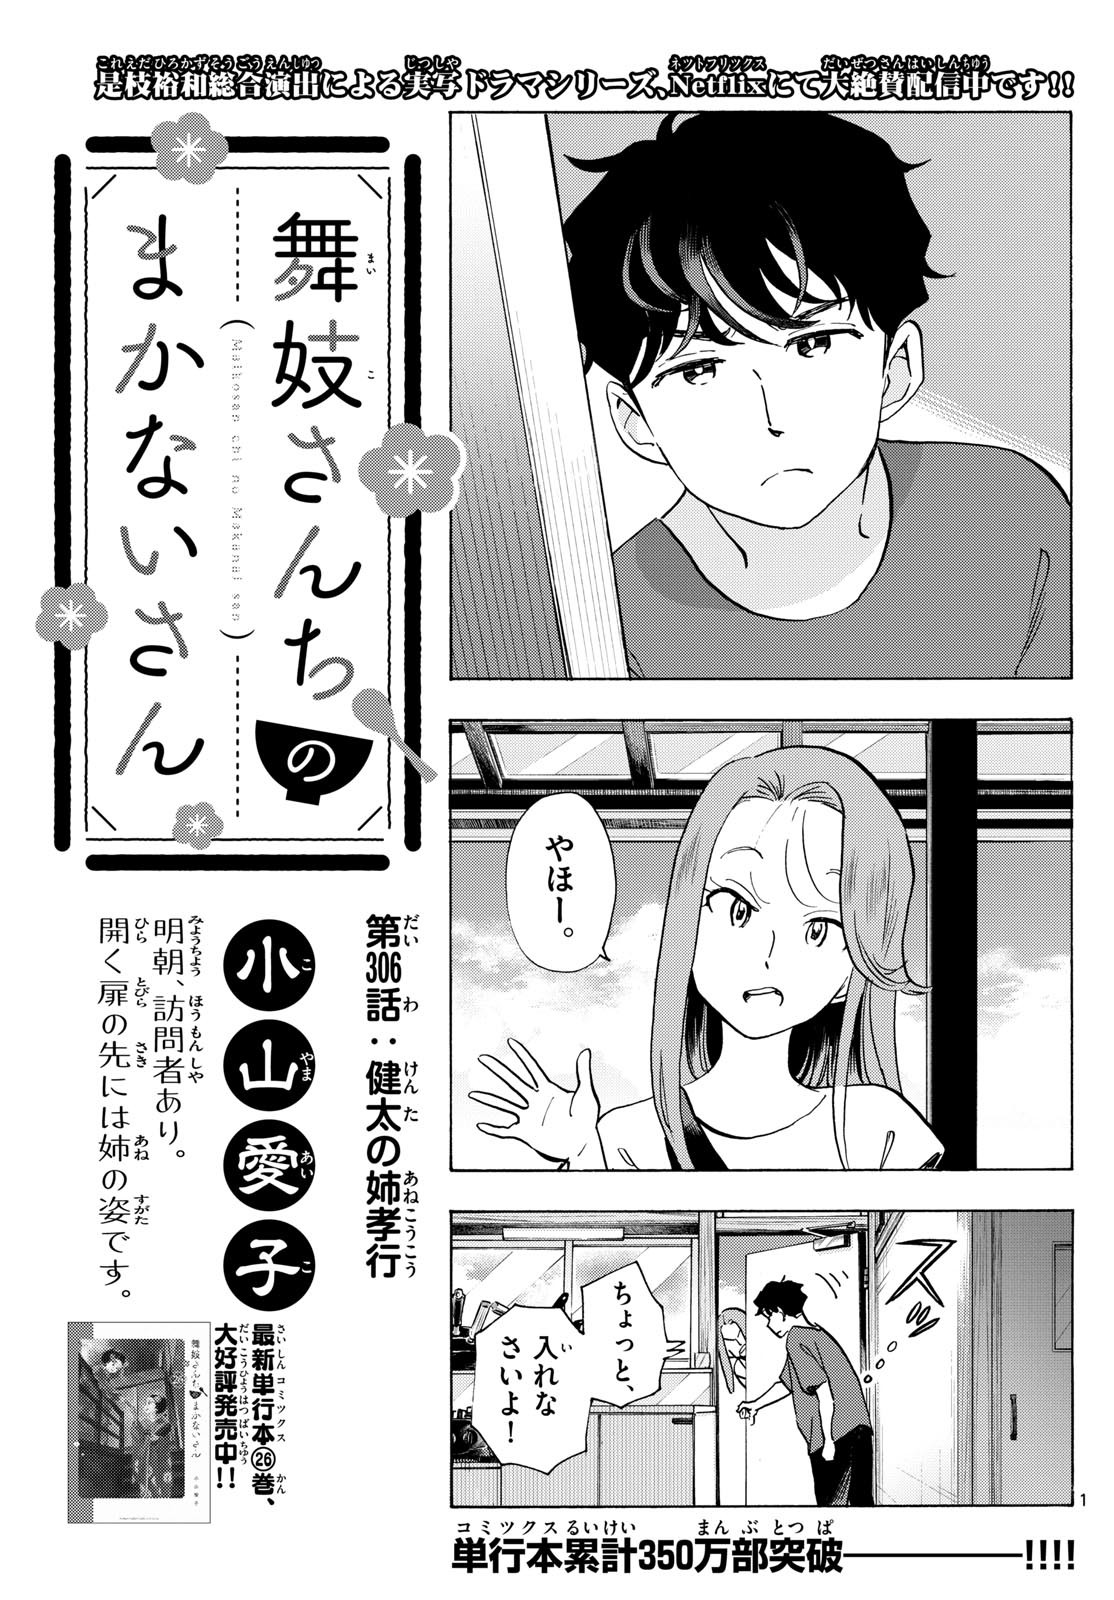 Maiko-san Chi no Makanai-san - Chapter 306 - Page 1